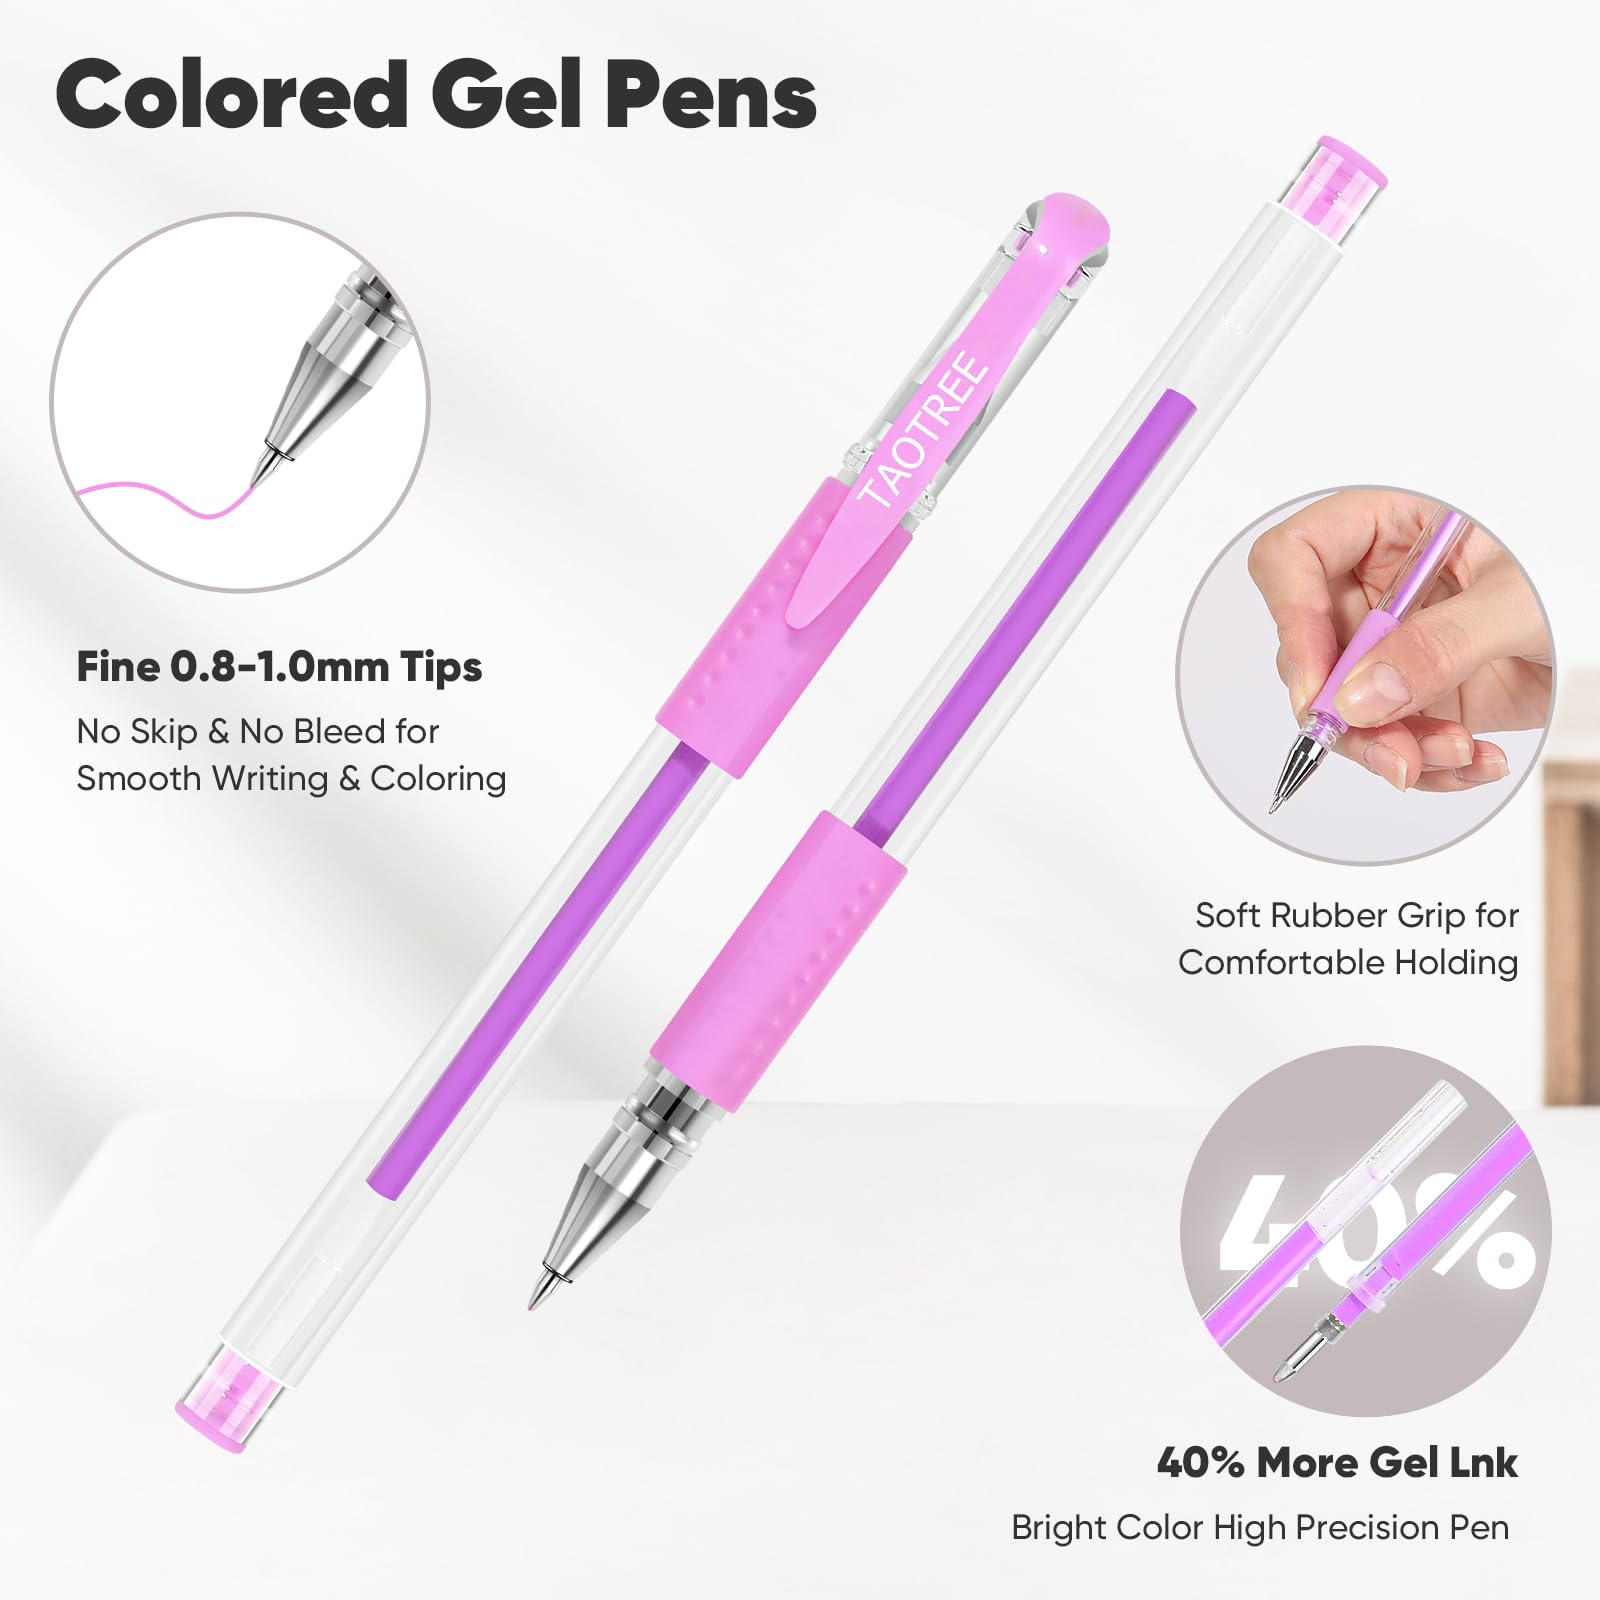 Taotree 36-Color Glitter Gel Pens for Adult Coloring - Neon Ink Drawin –  WoodArtSupply